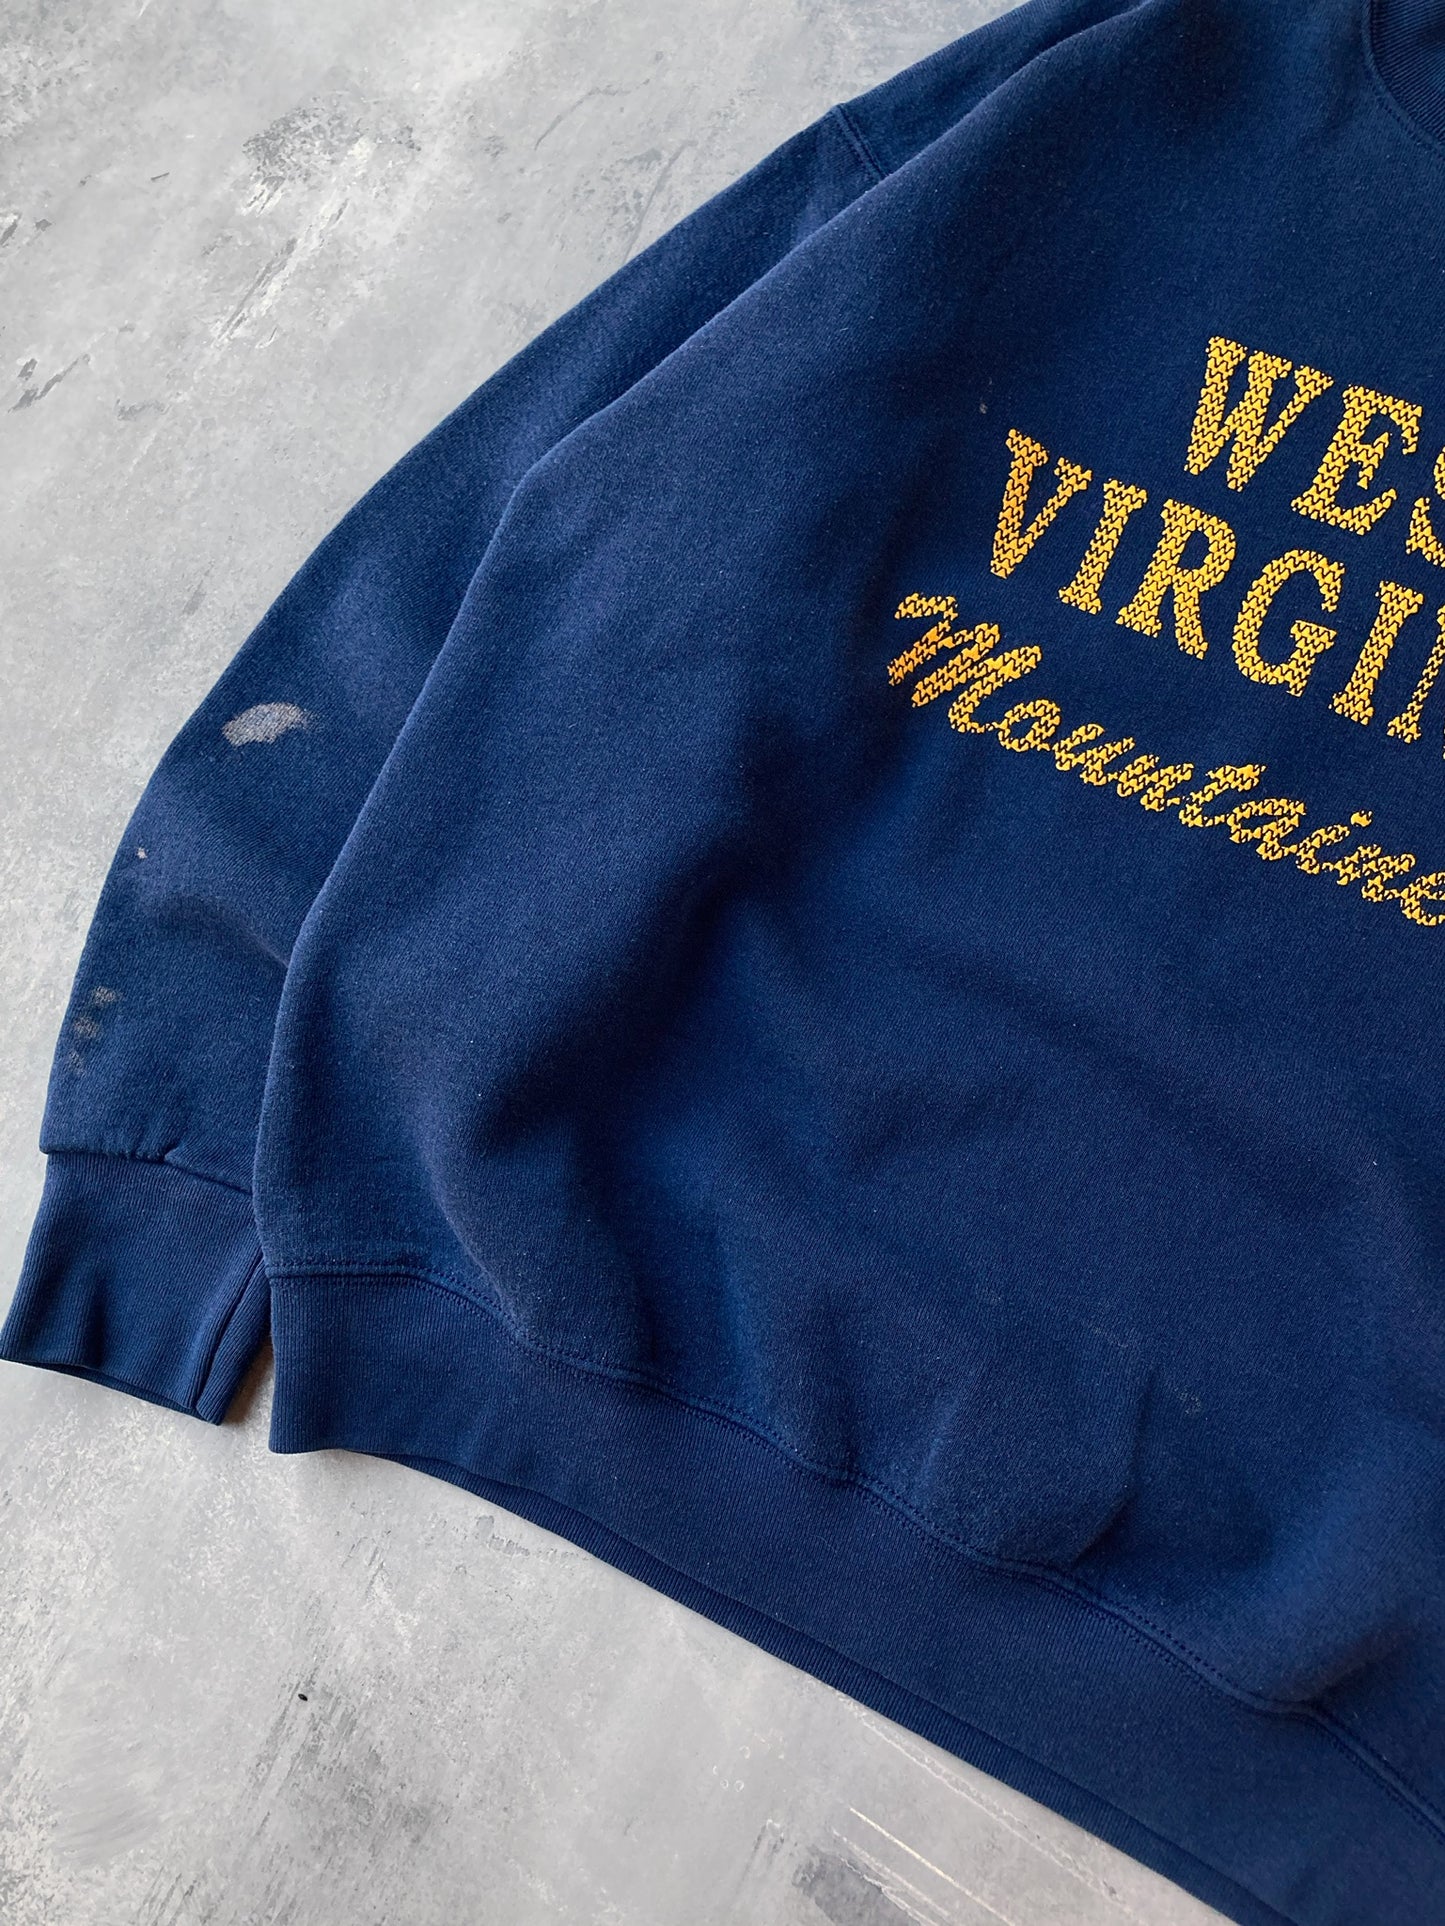 West Virginia Sweatshirt 90's - Large